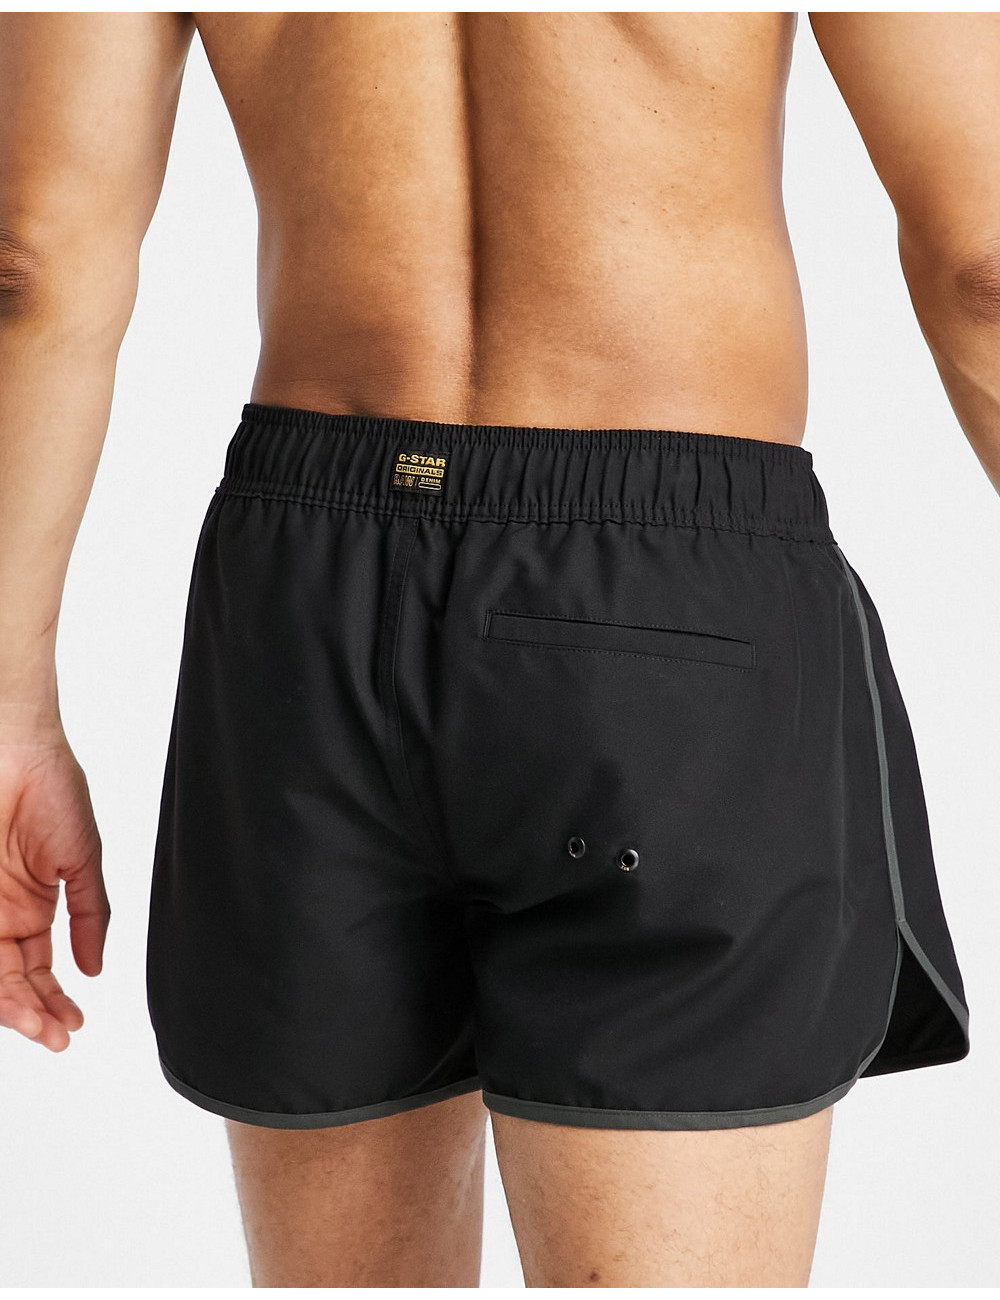 G-Star swim shorts in black